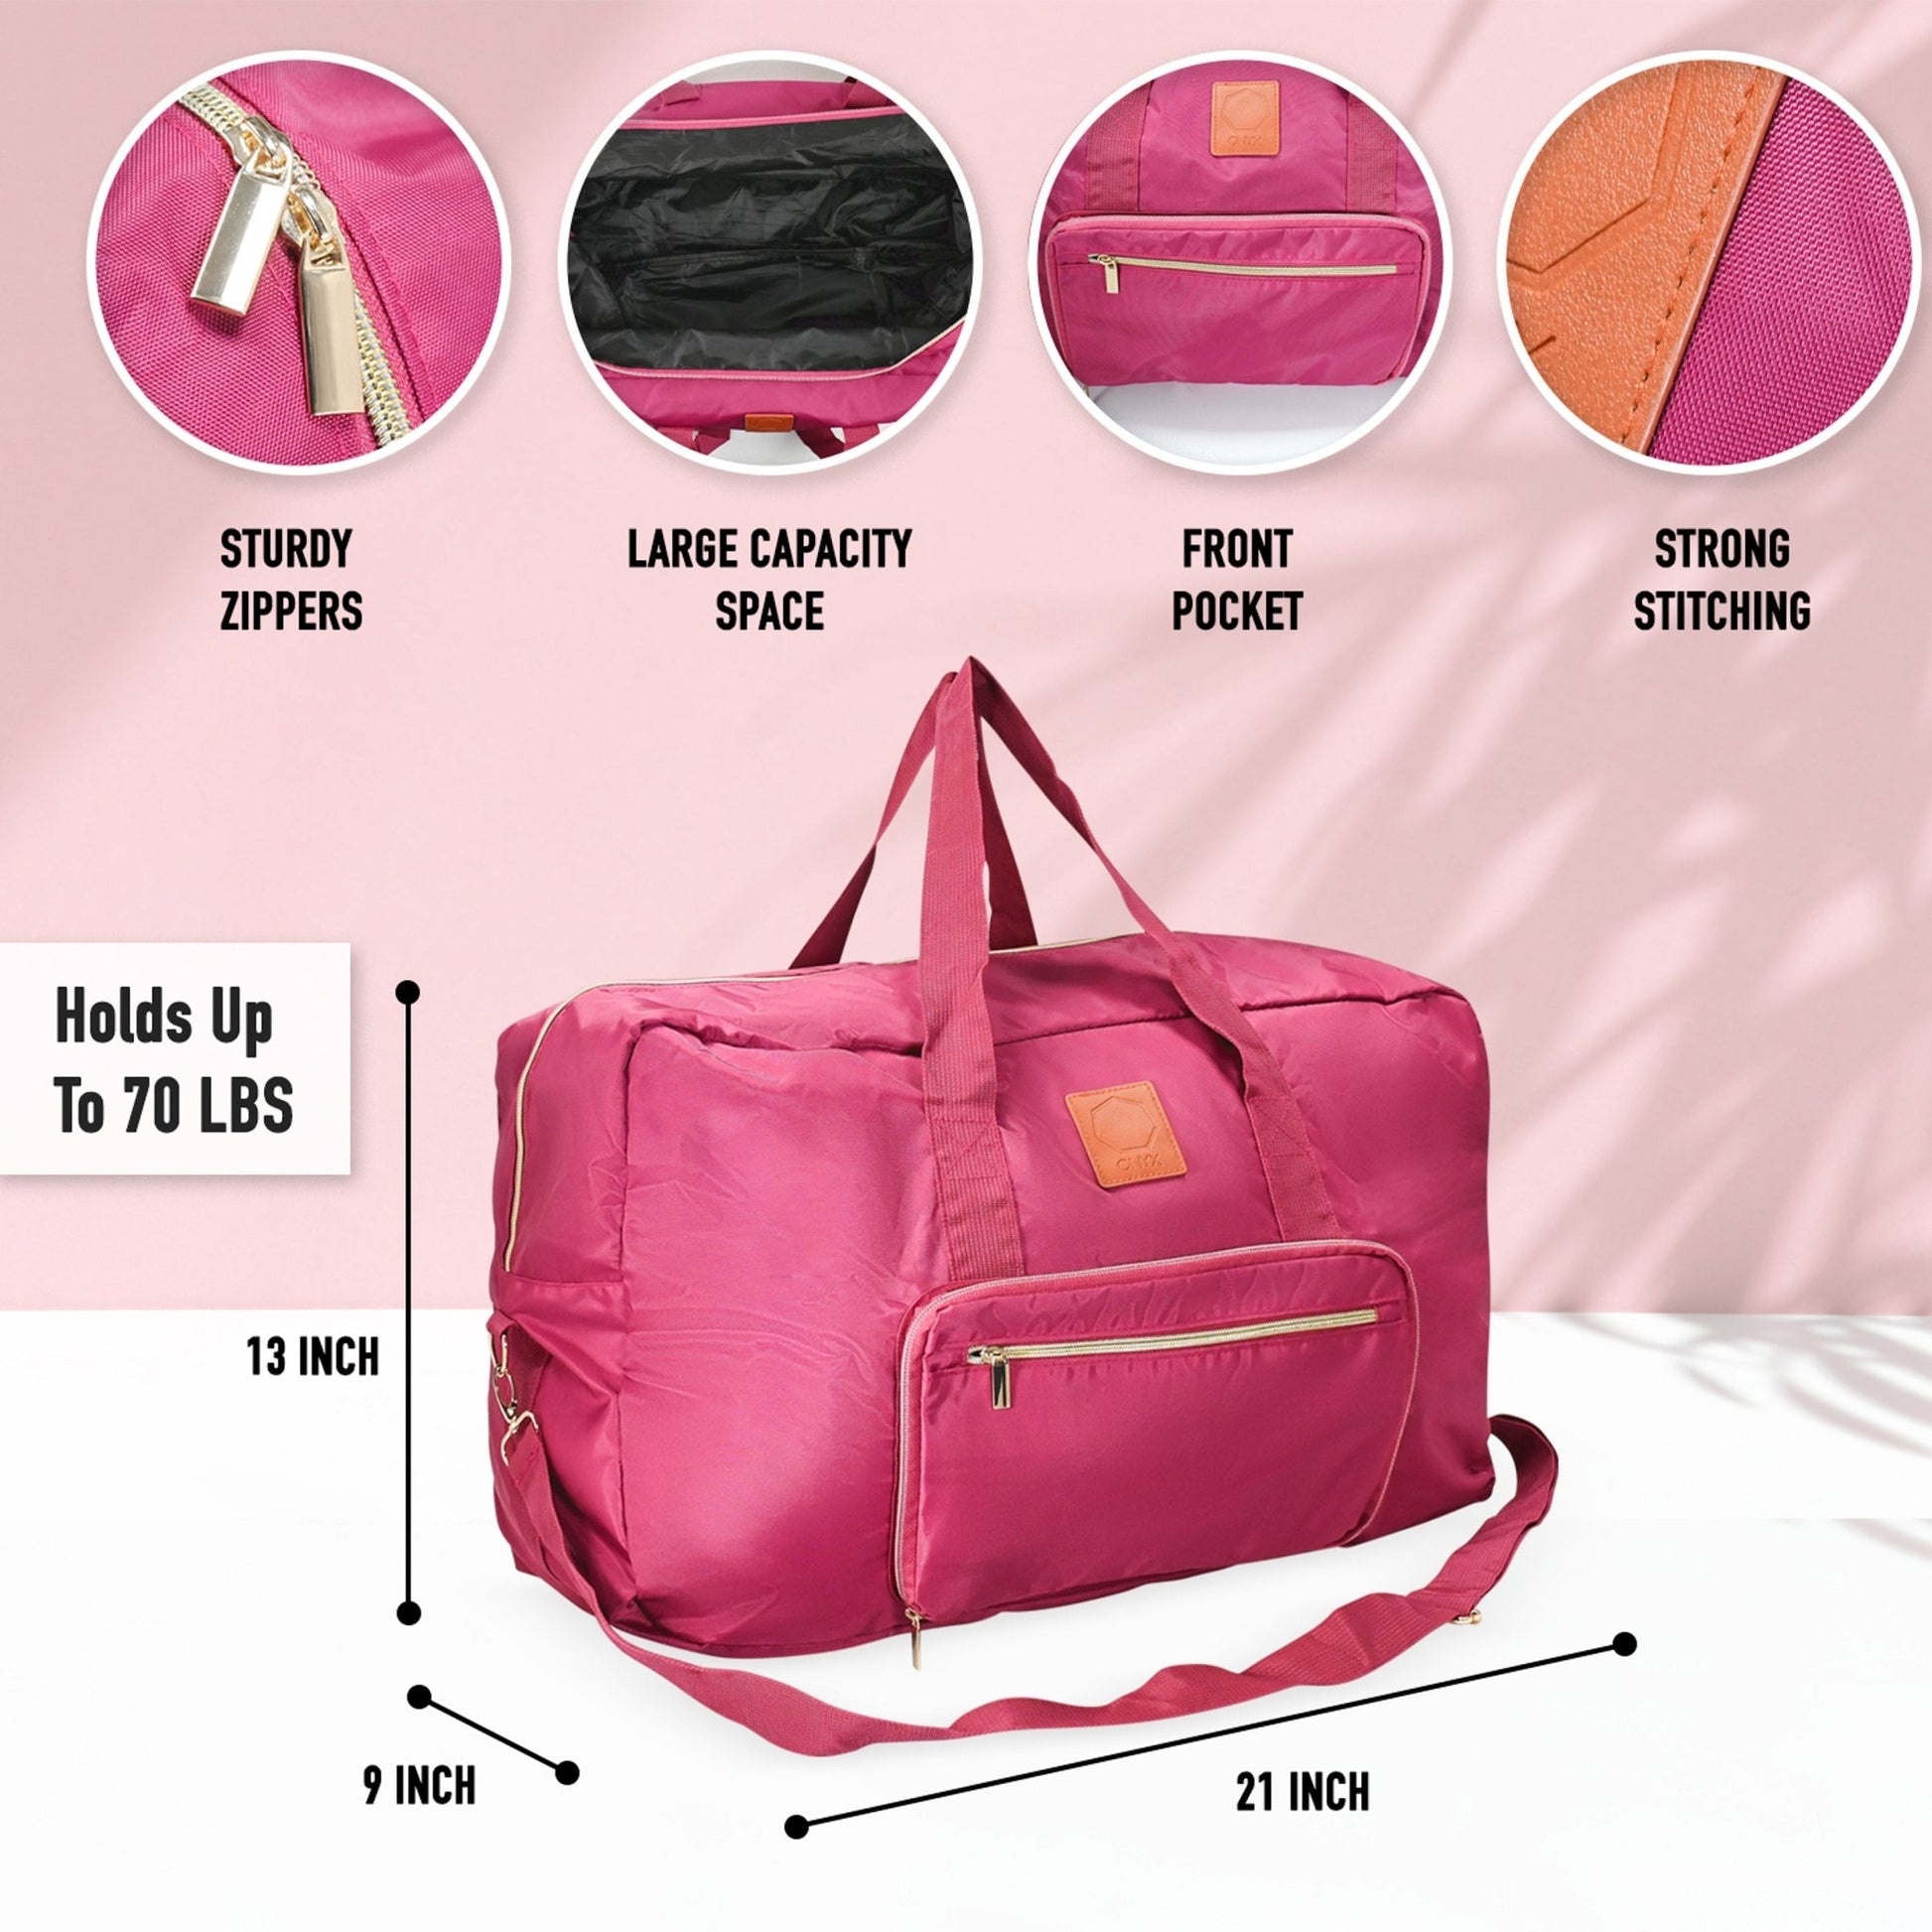 Floral Electronics Organizer Bag – Foldable collapsible weekender bag, travel bag, hand luggage, handbag for sports and travel, weekend bag